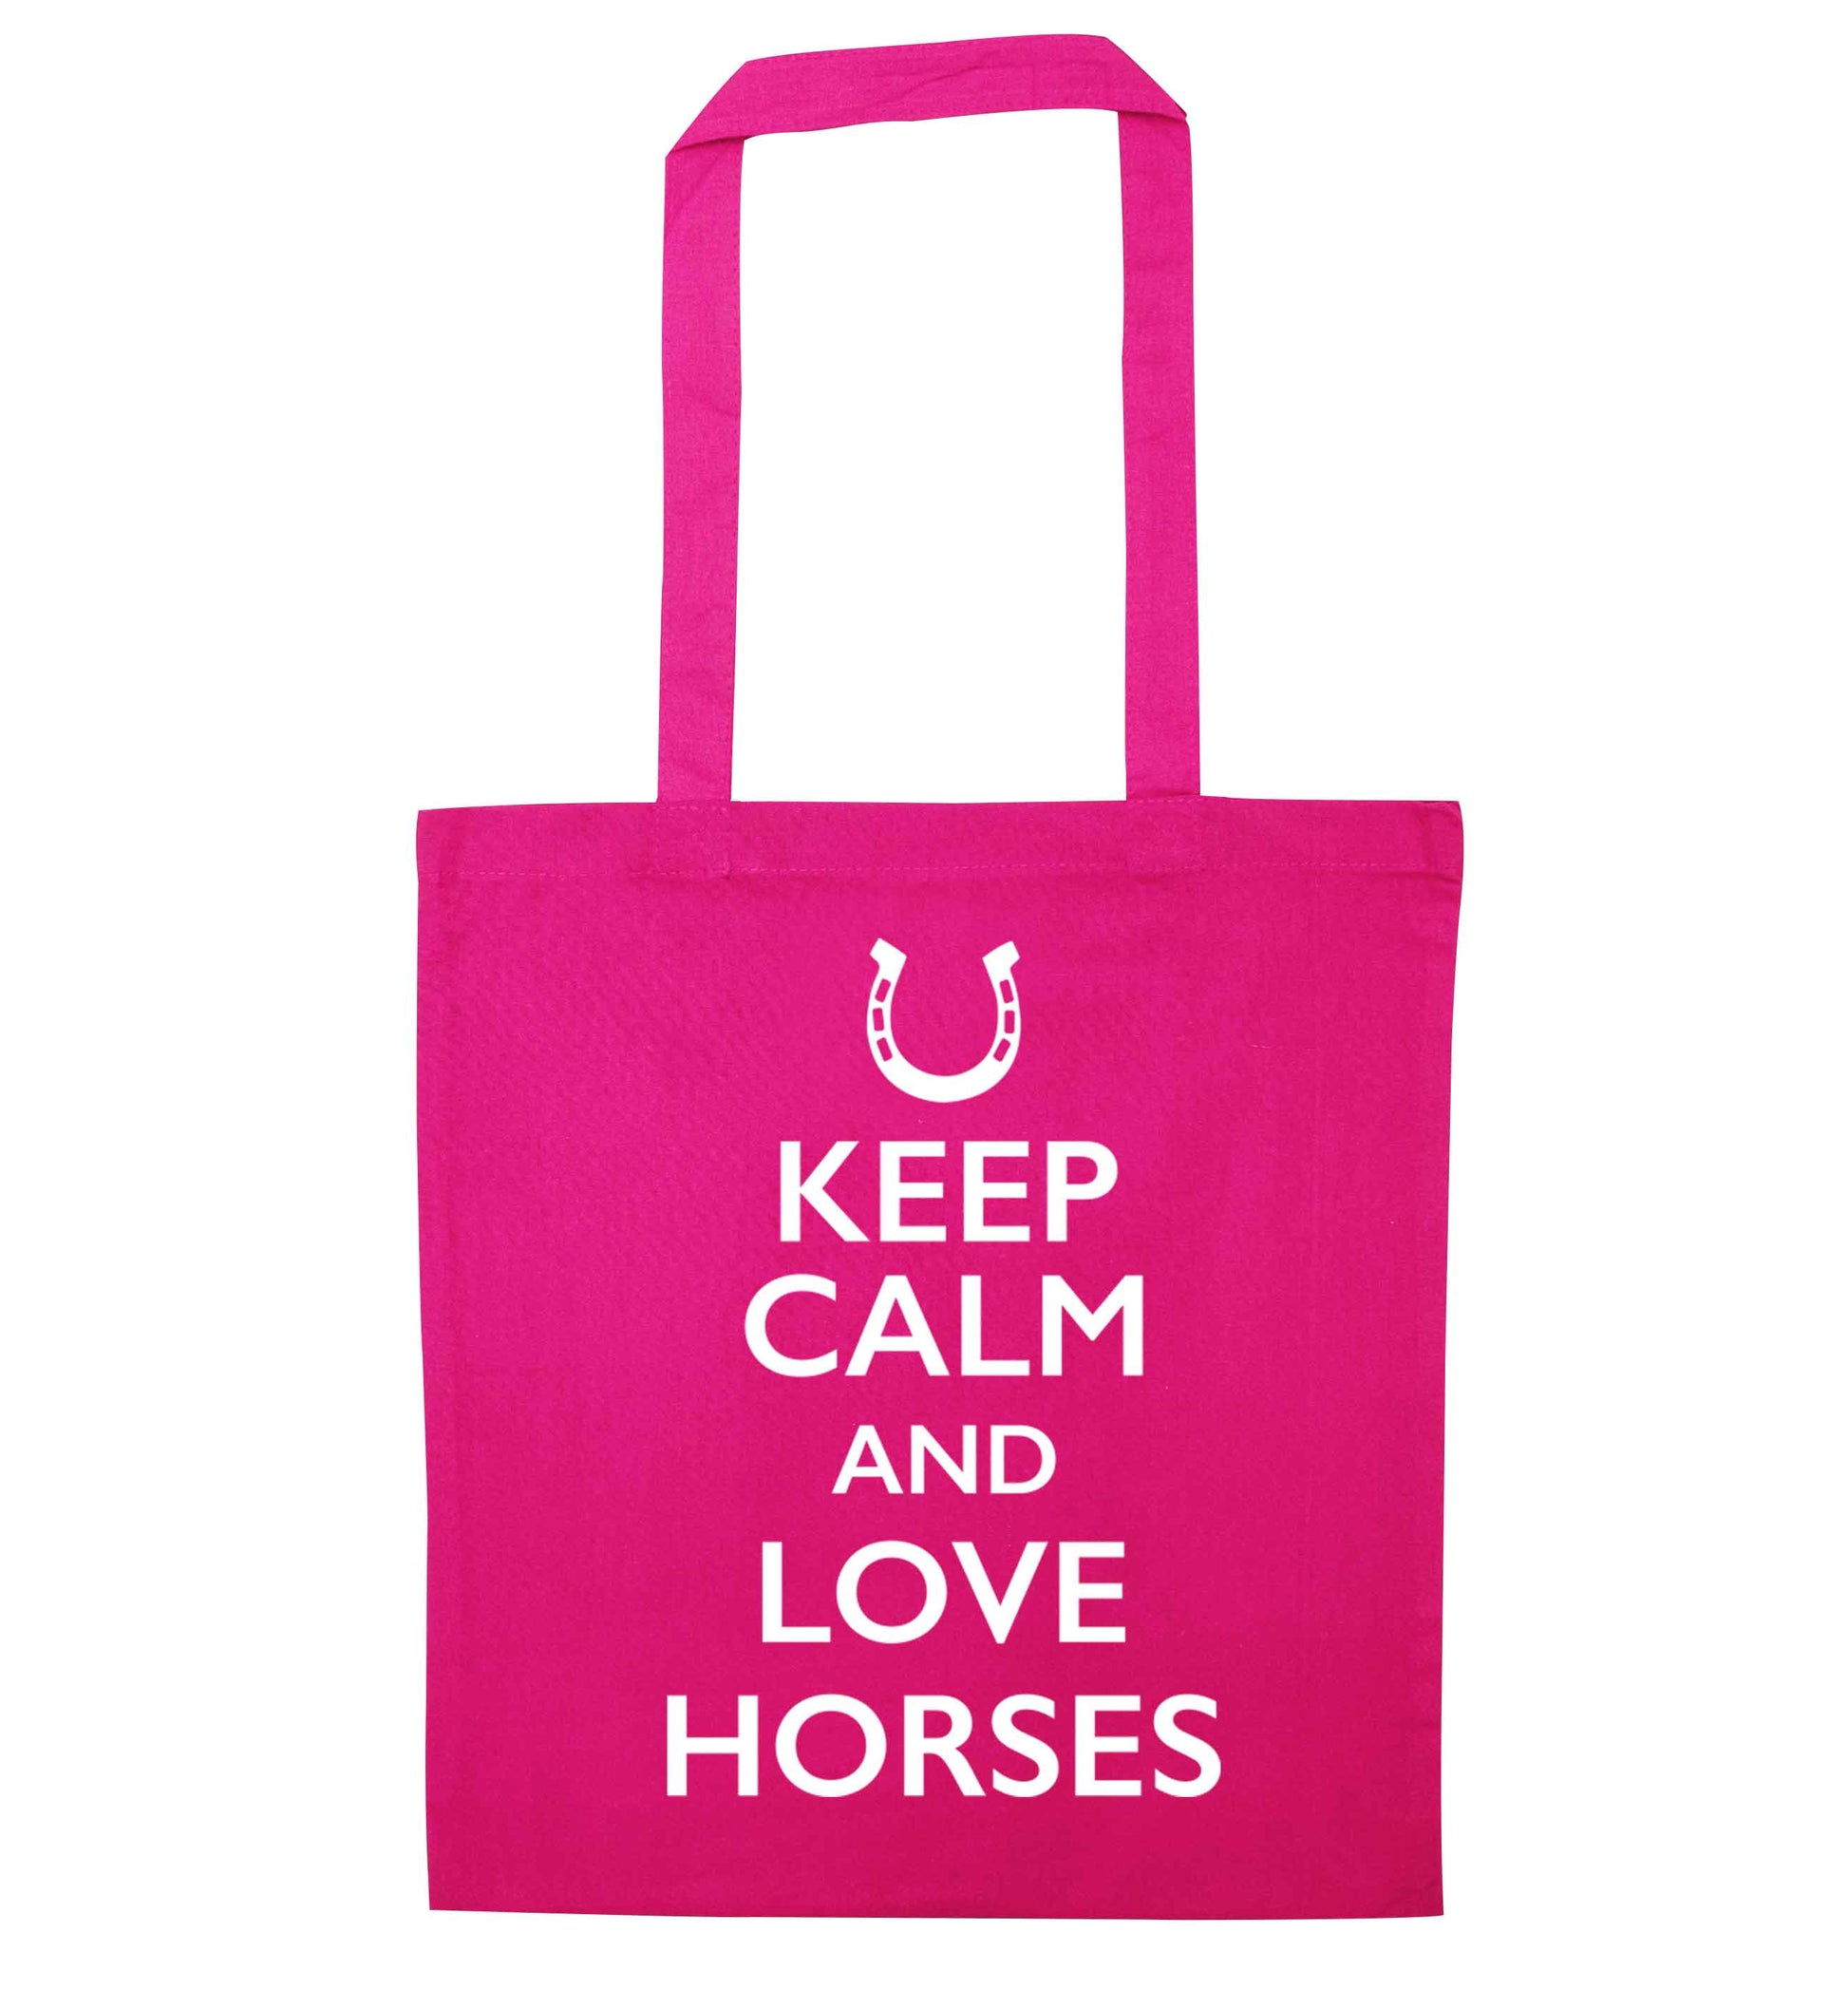 Keep calm and love horses pink tote bag